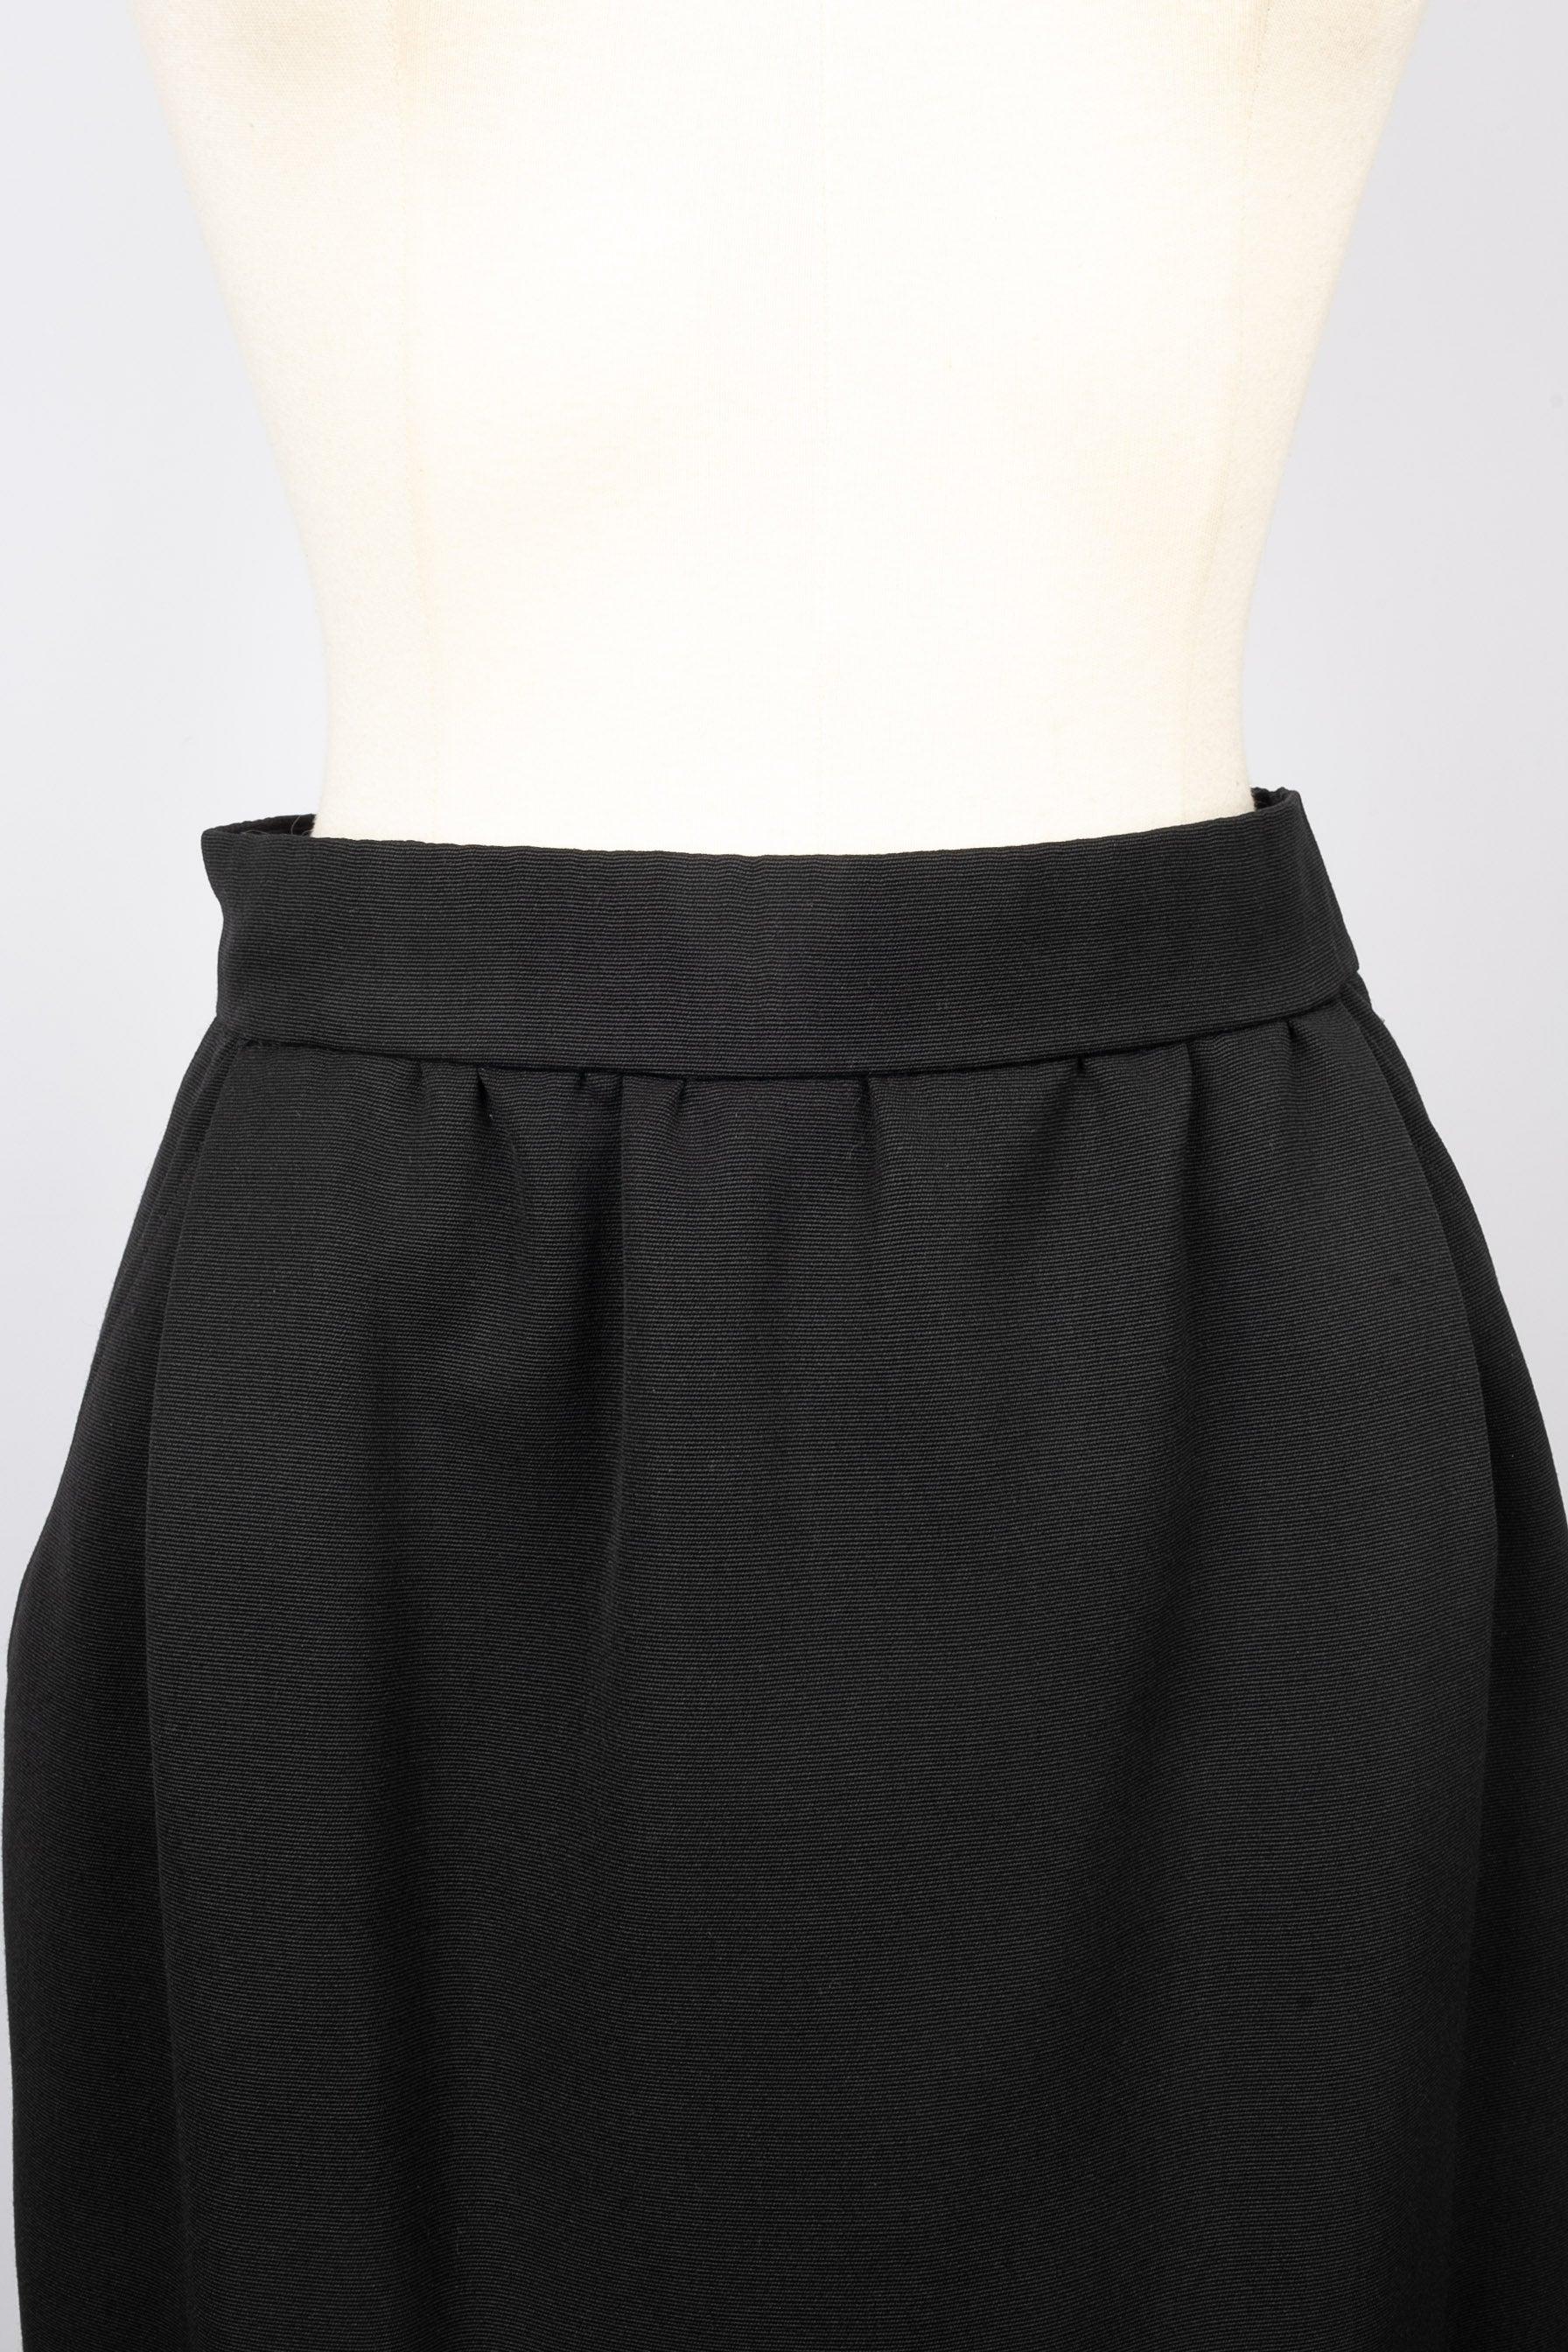 Yves Saint Laurent Black Skirt Suit Enlivened with Satin Belt Haute Couture For Sale 3